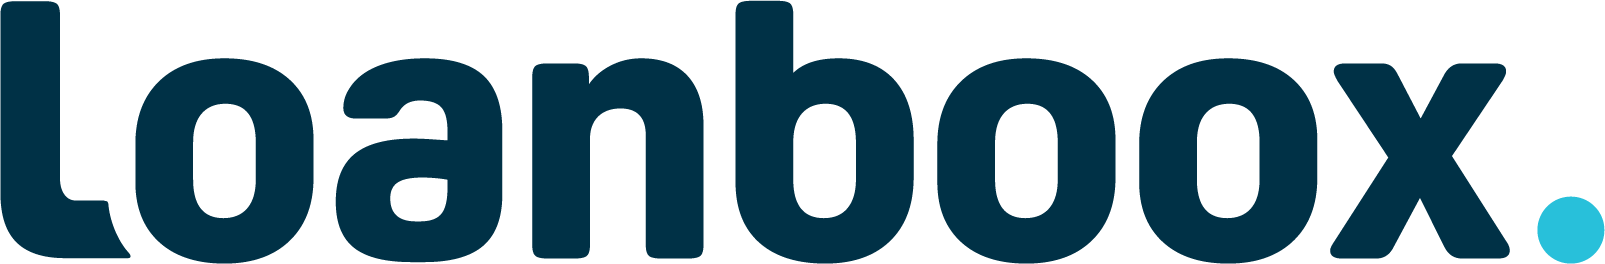 logo loanboox